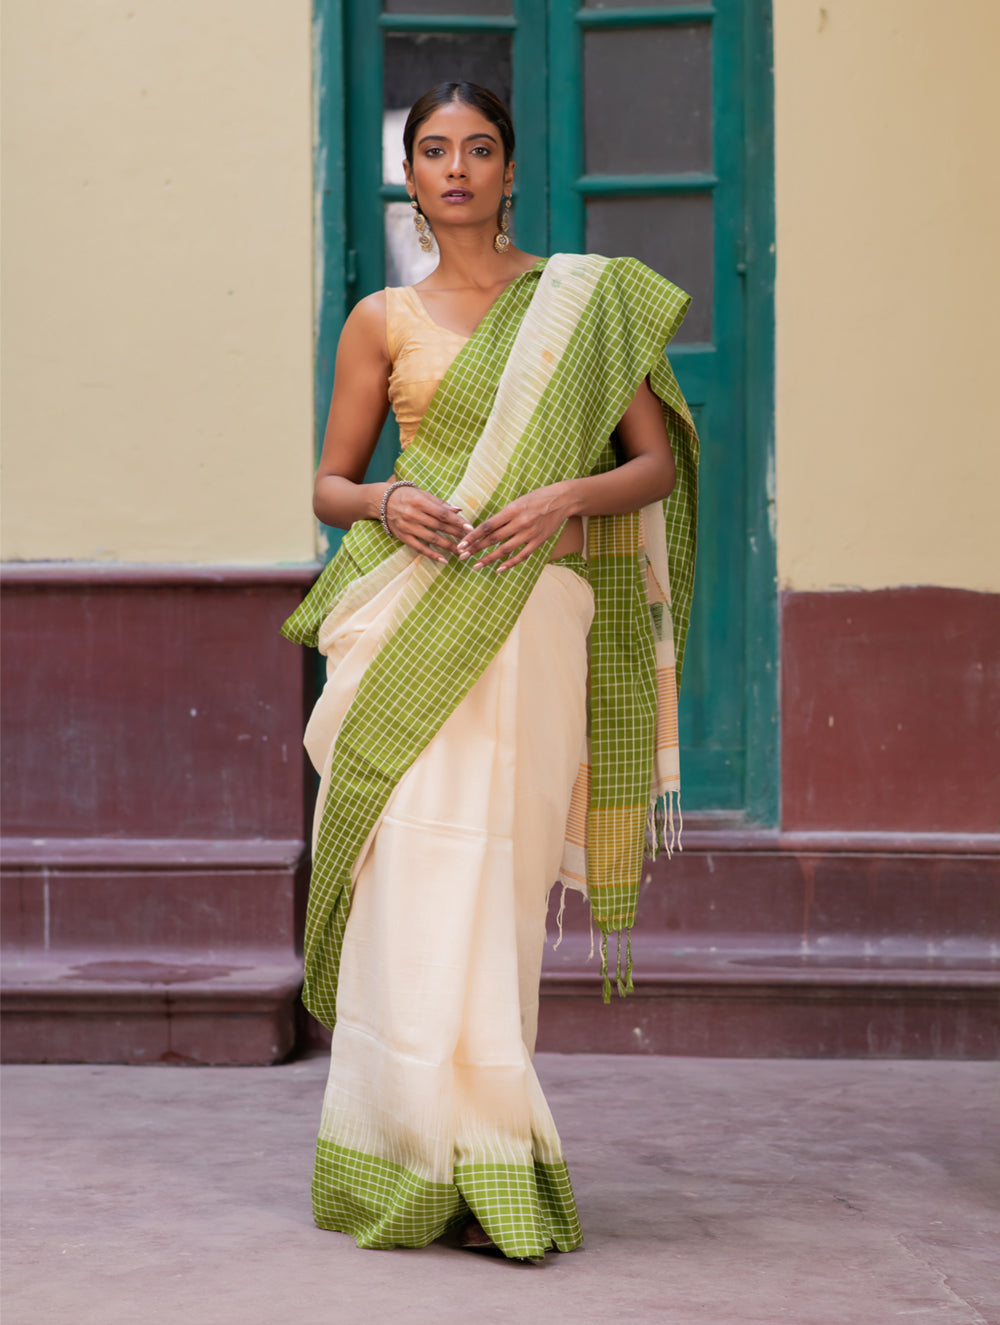 Load image into Gallery viewer, Handwoven Elegance. Bengal Khadi Cotton Saree 